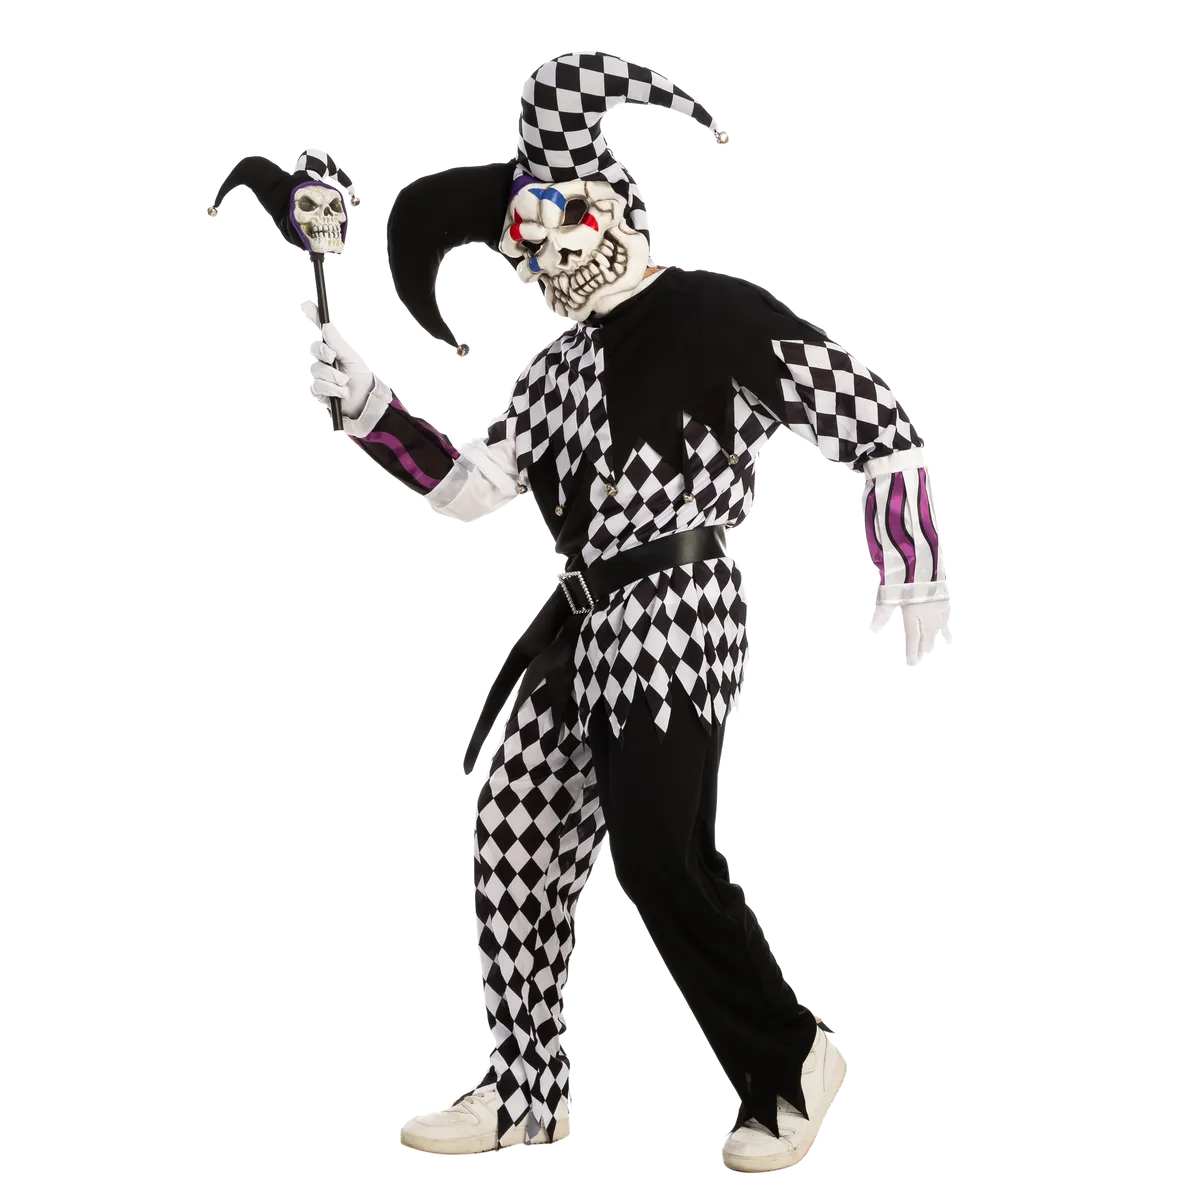 Kids Evil Jester Clown Halloween Costume